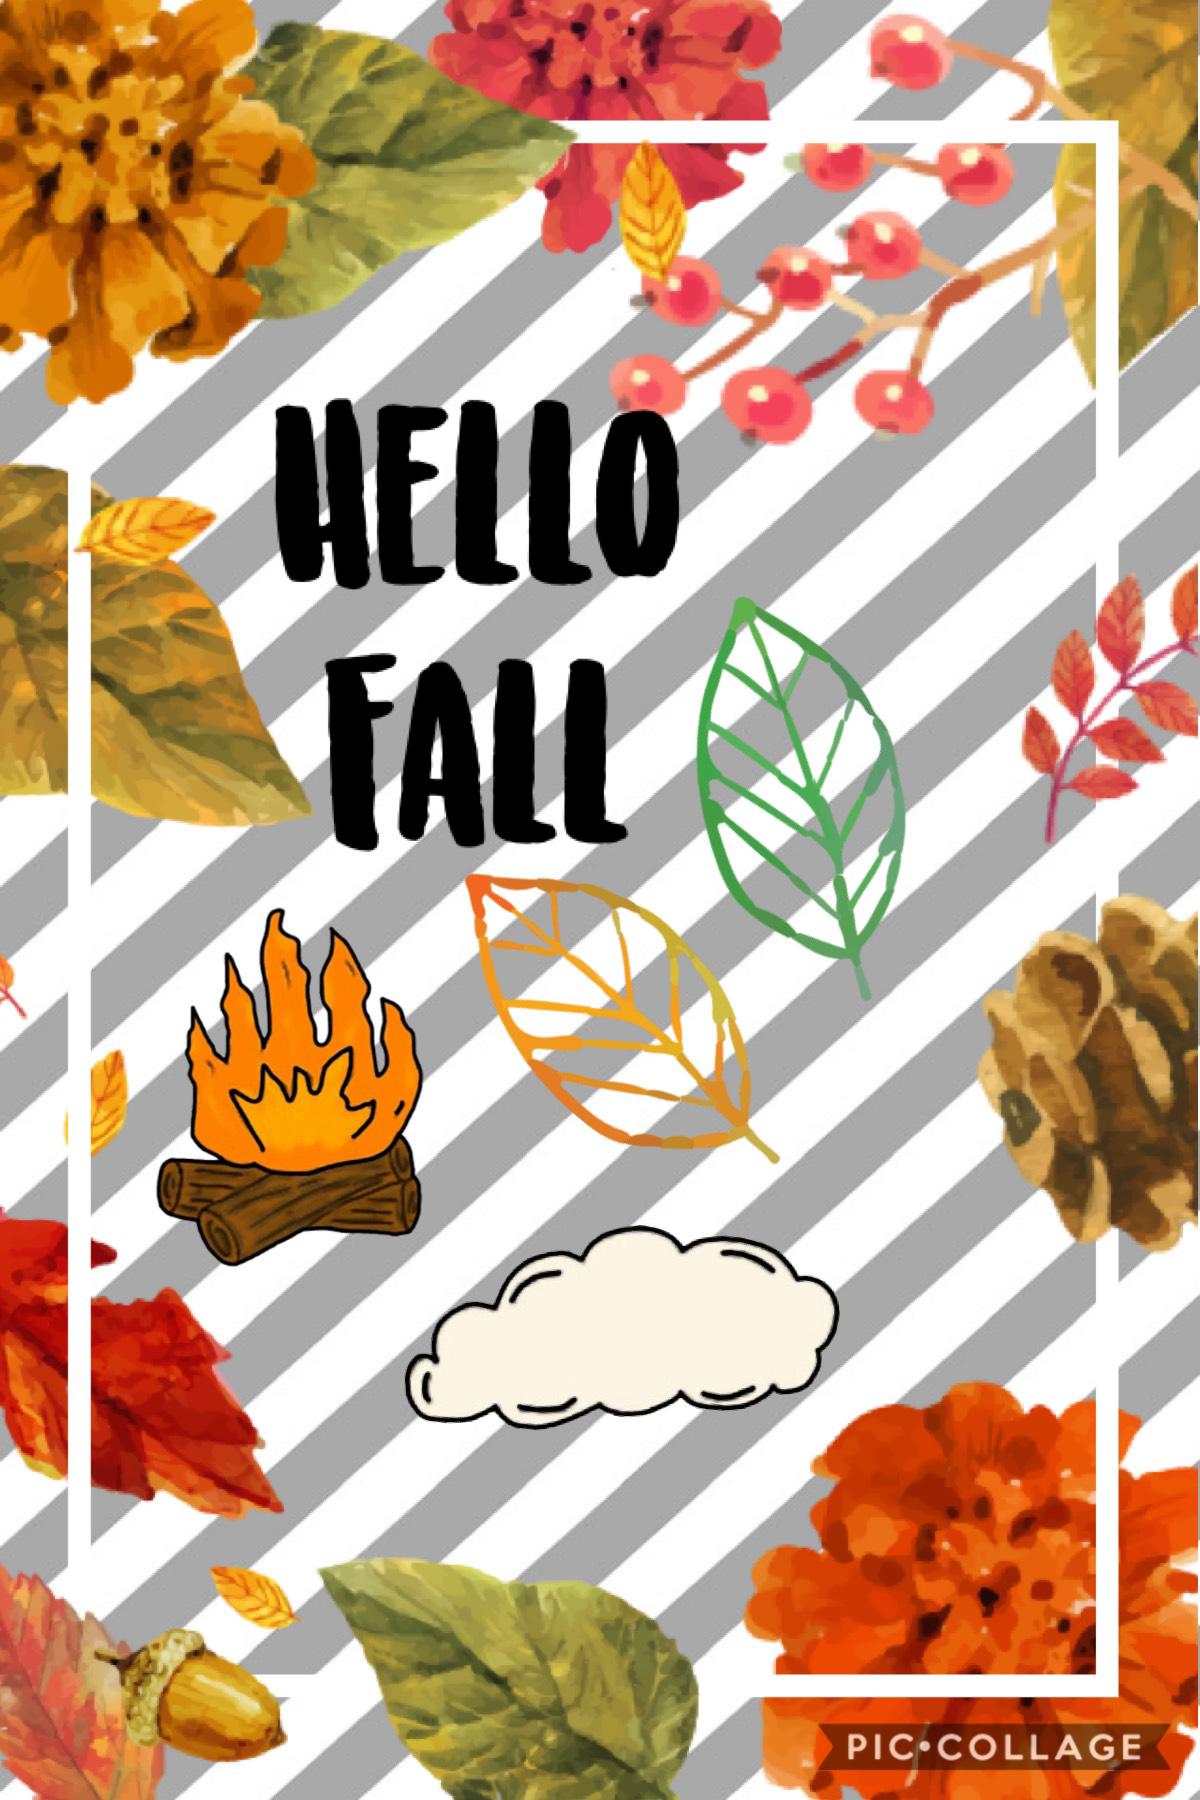 I welcome fall greatly!